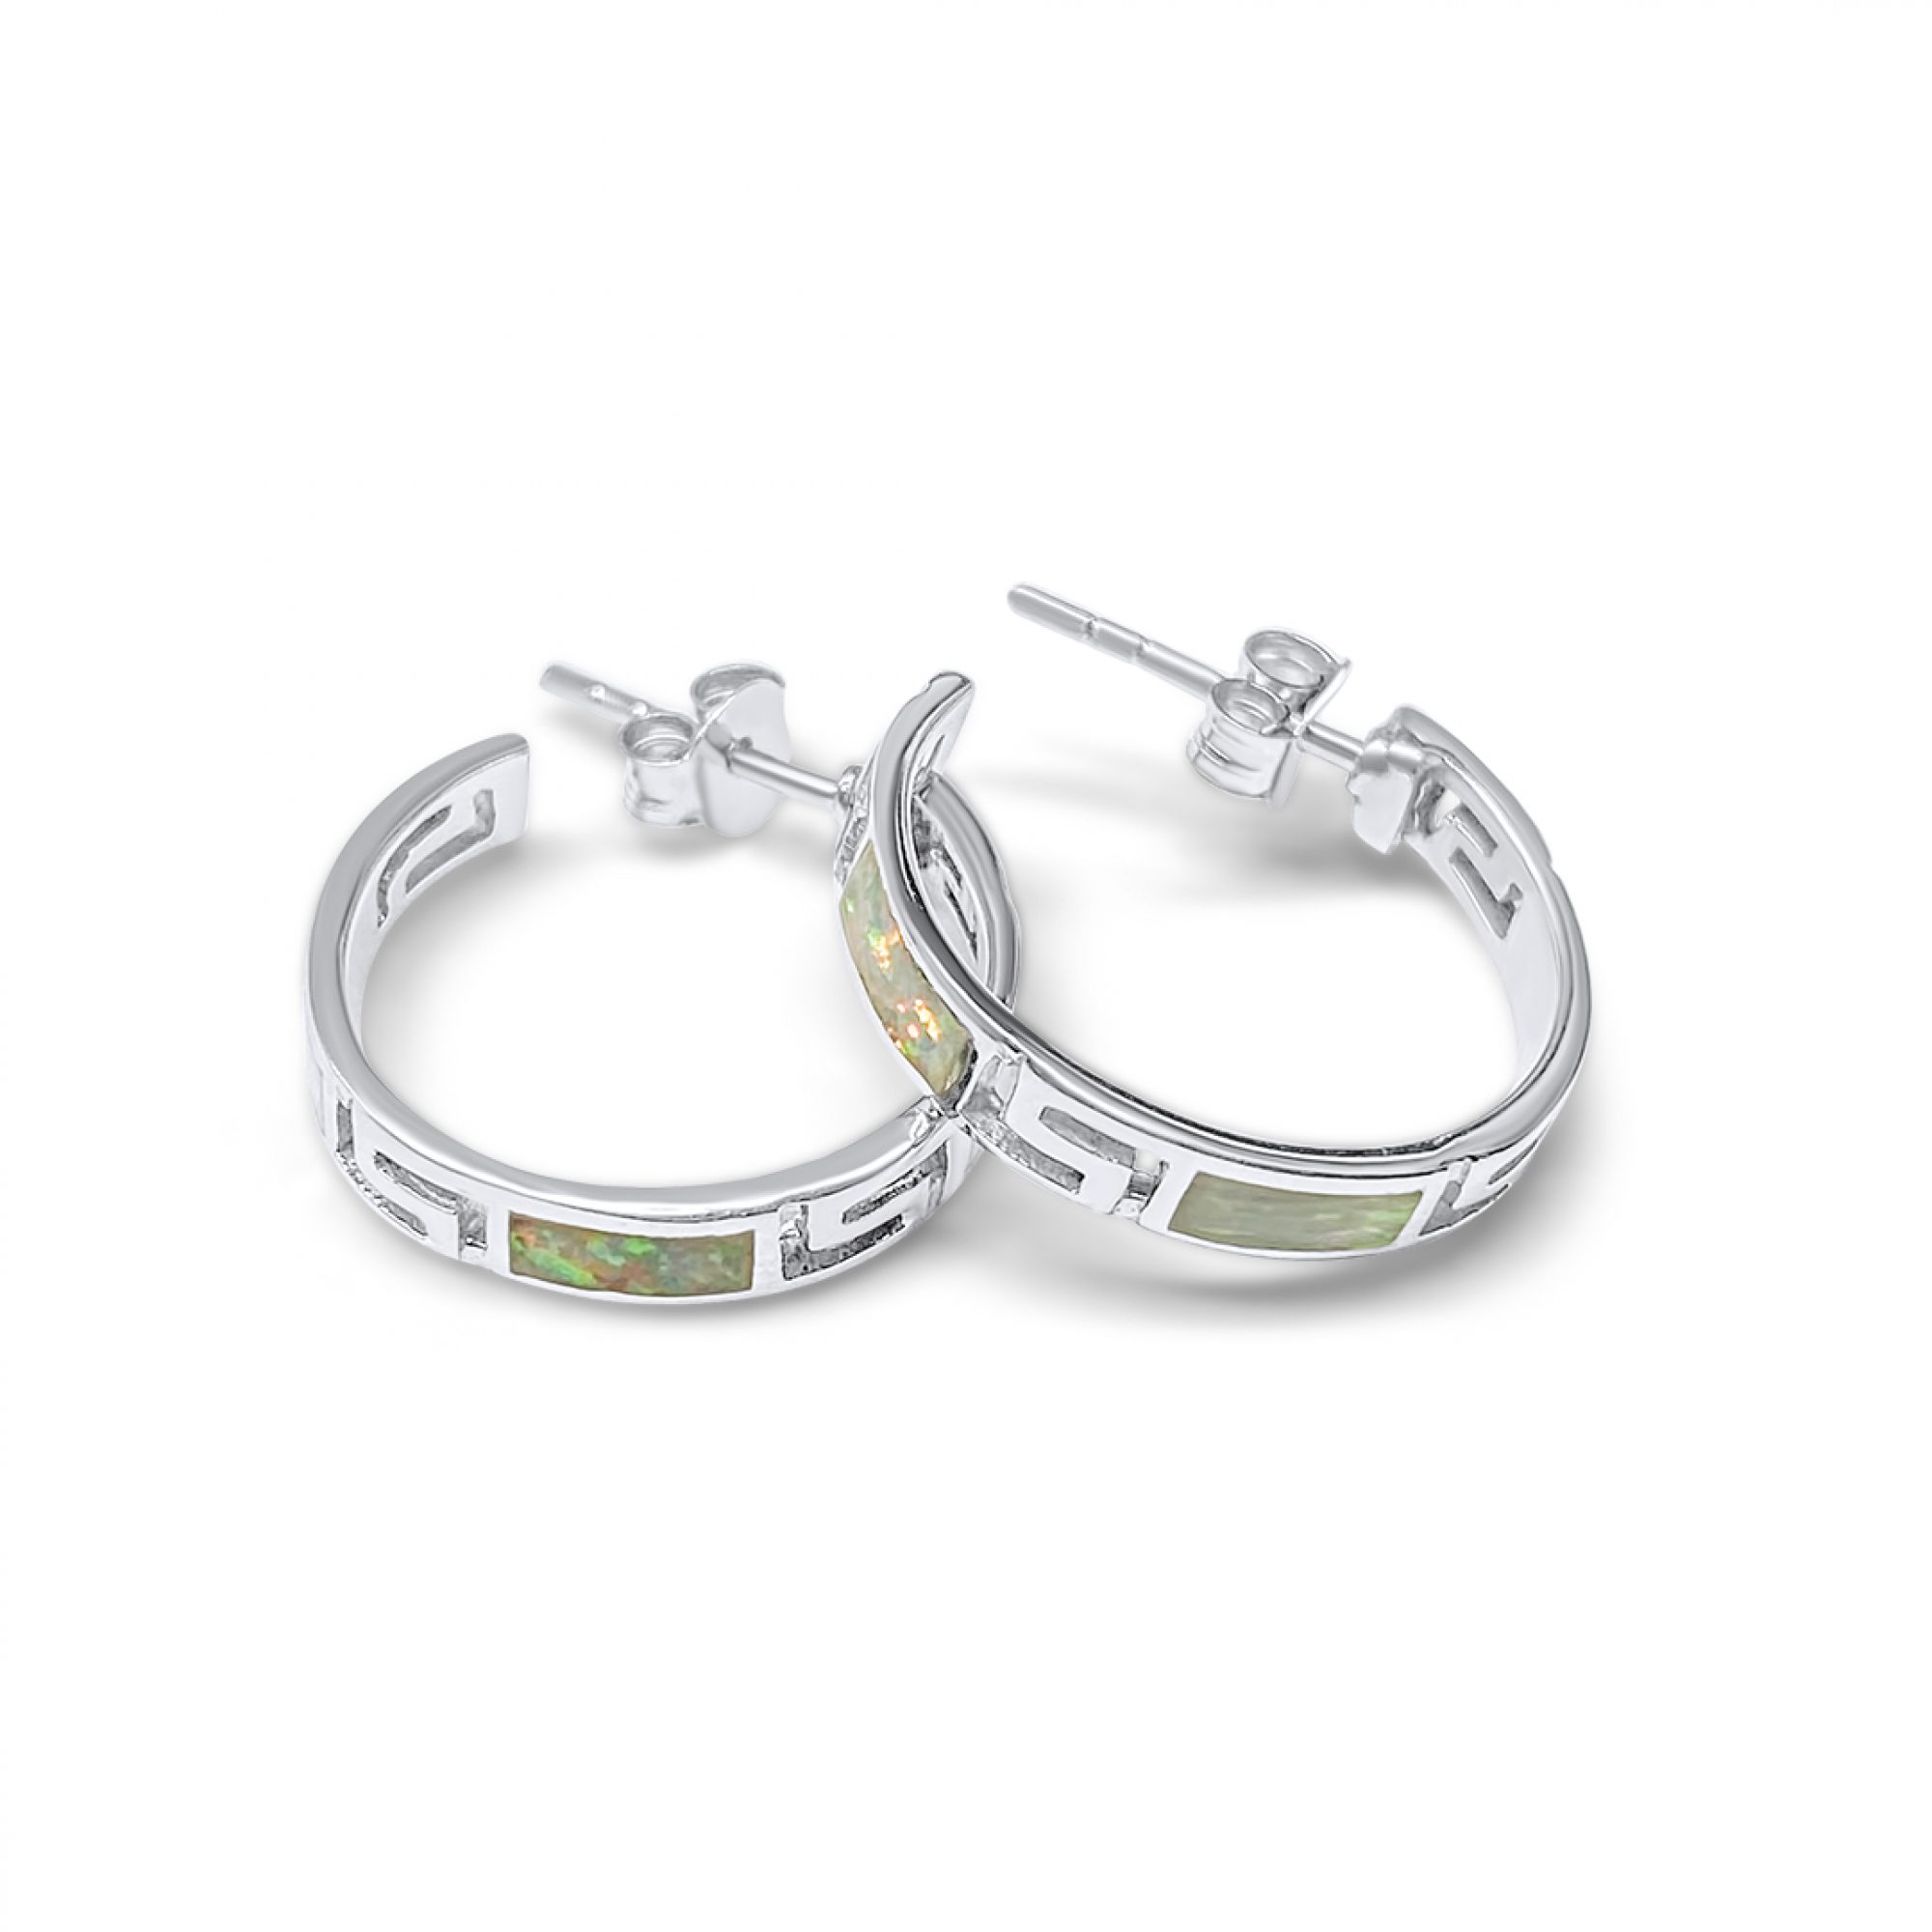 Hoops earrings with white opal